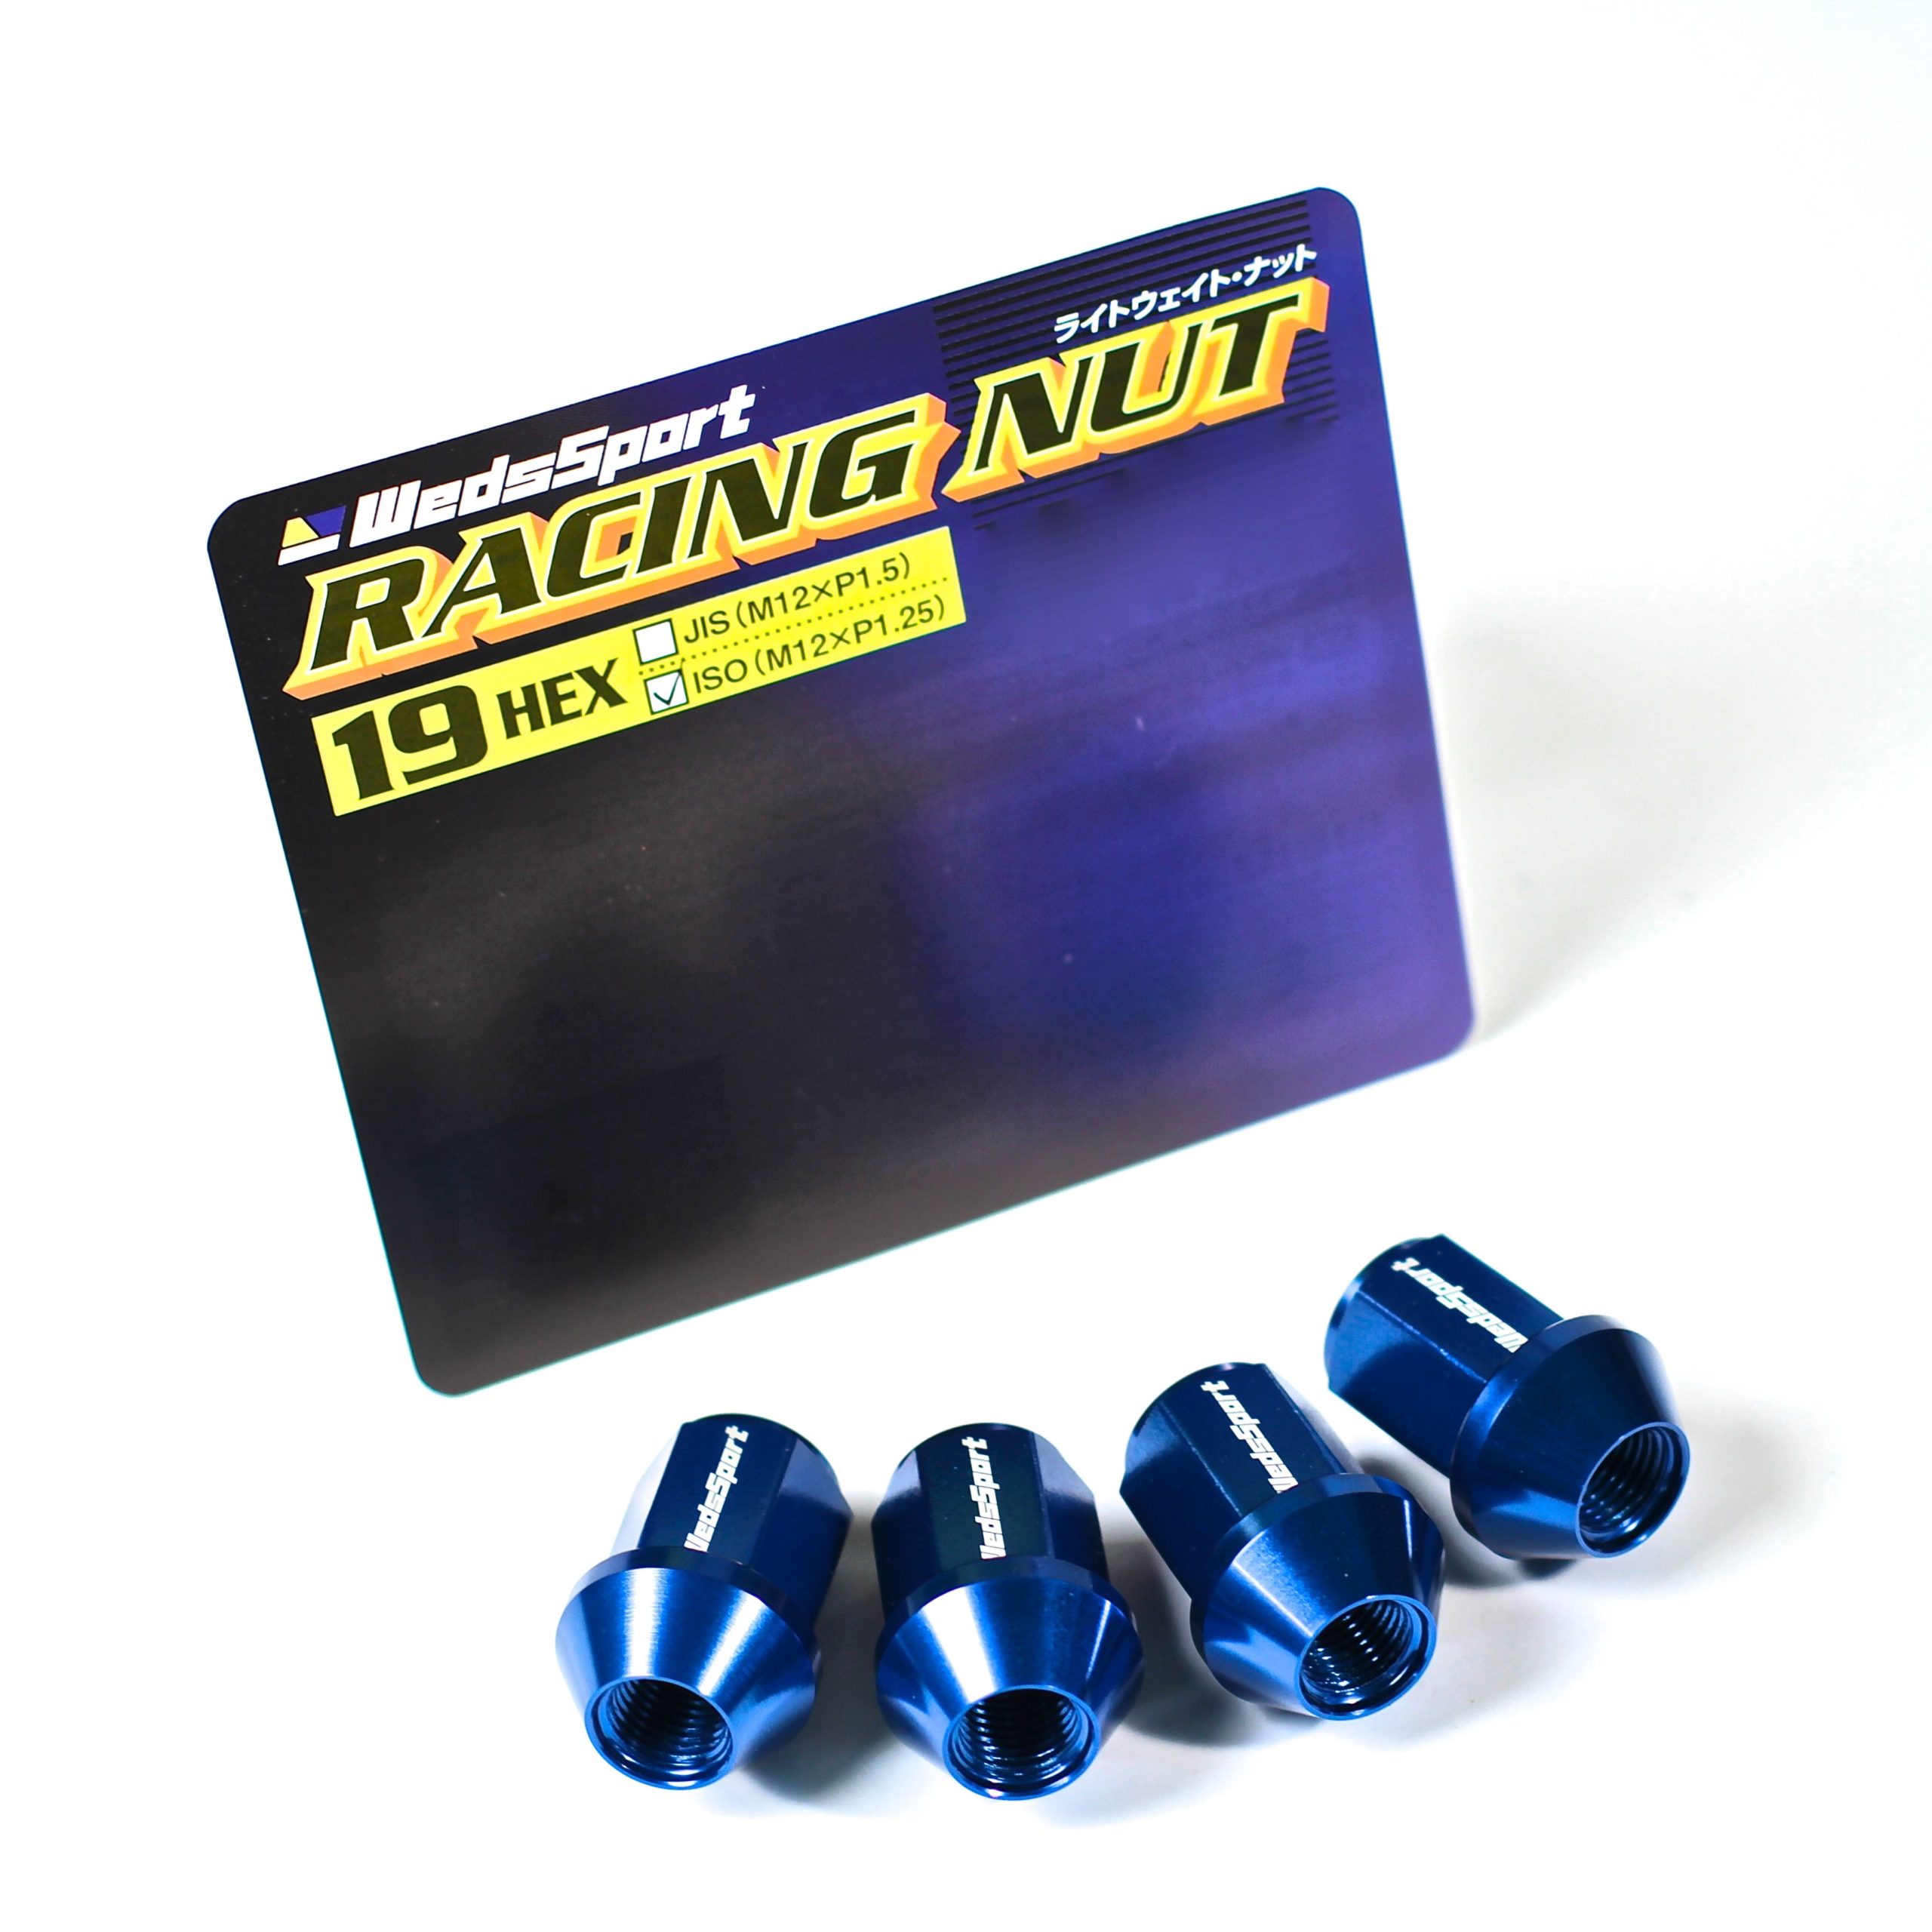 Wedssport Racing Lug Nuts Forged Aluminum 19 HEX M12xP1.5 Blue